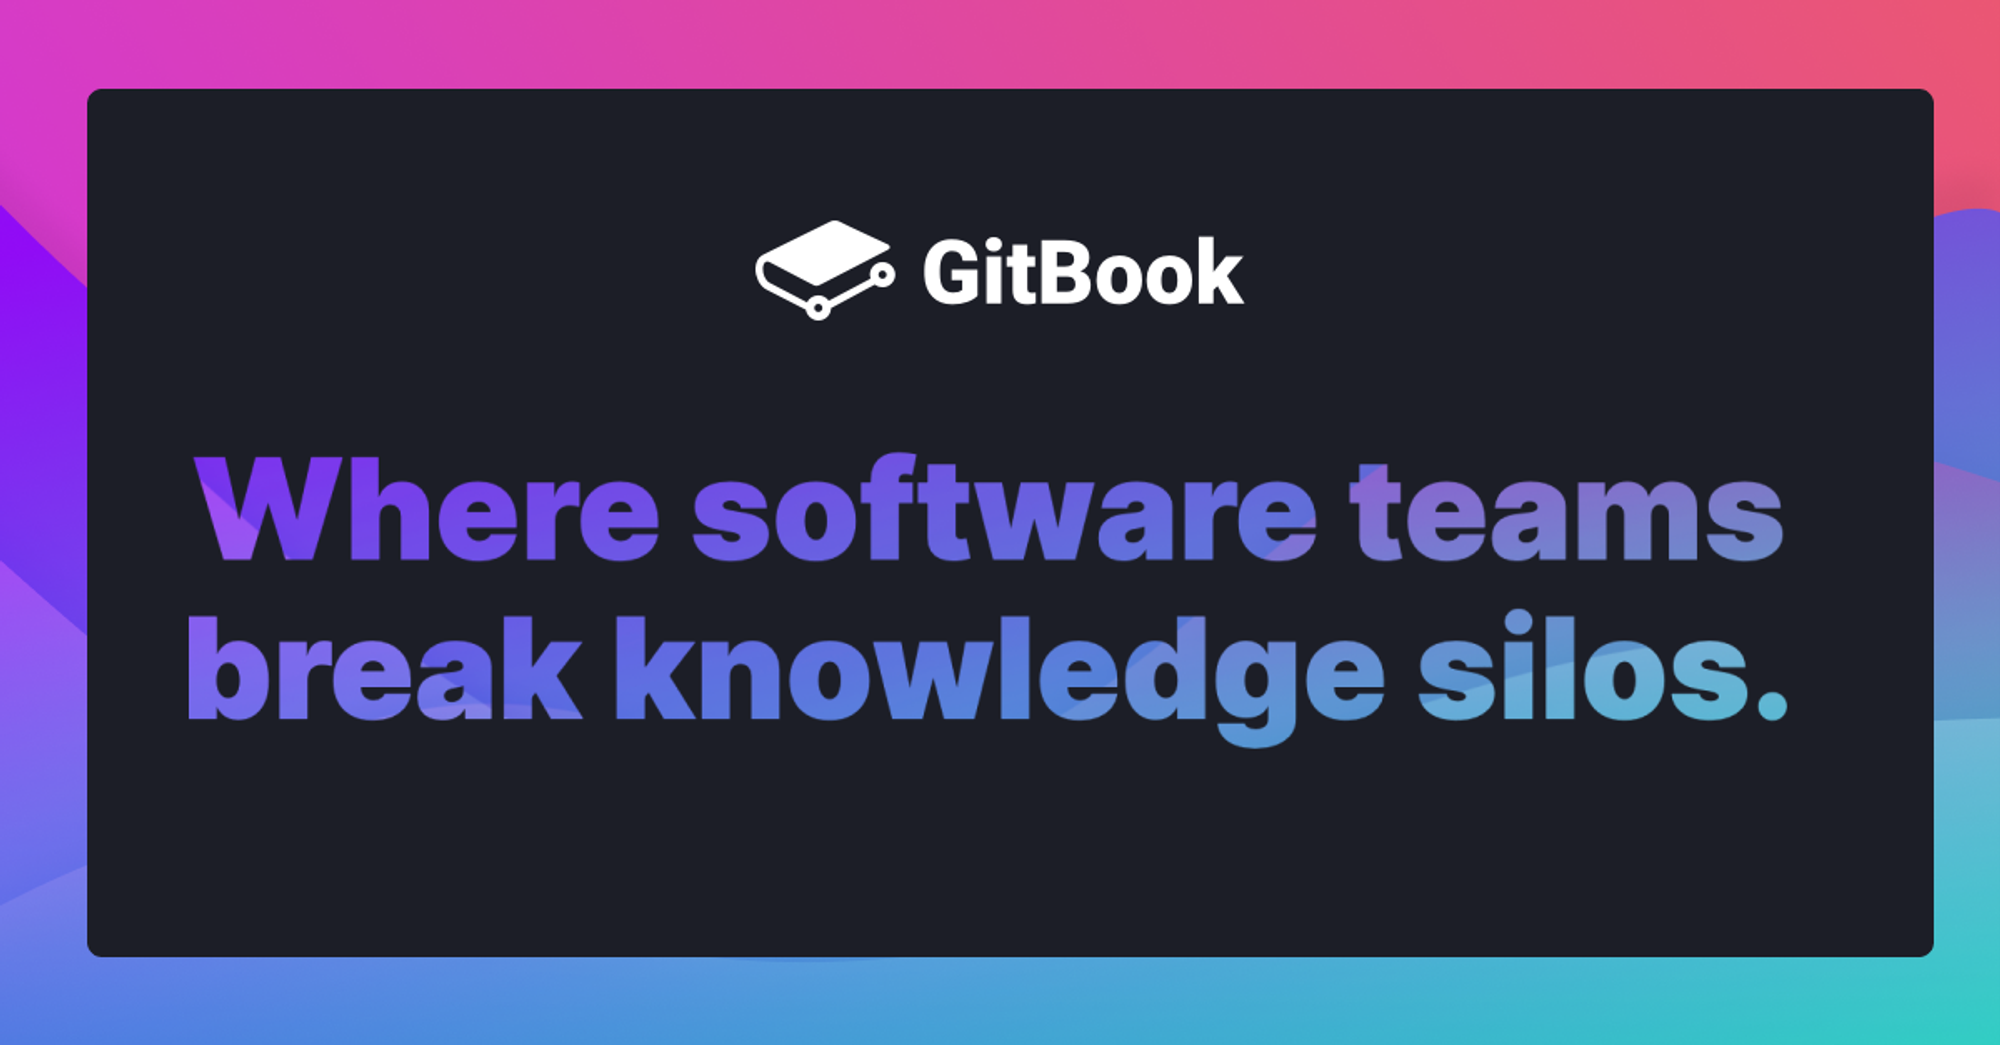 GitBook - Where software teams break knowledge silos.